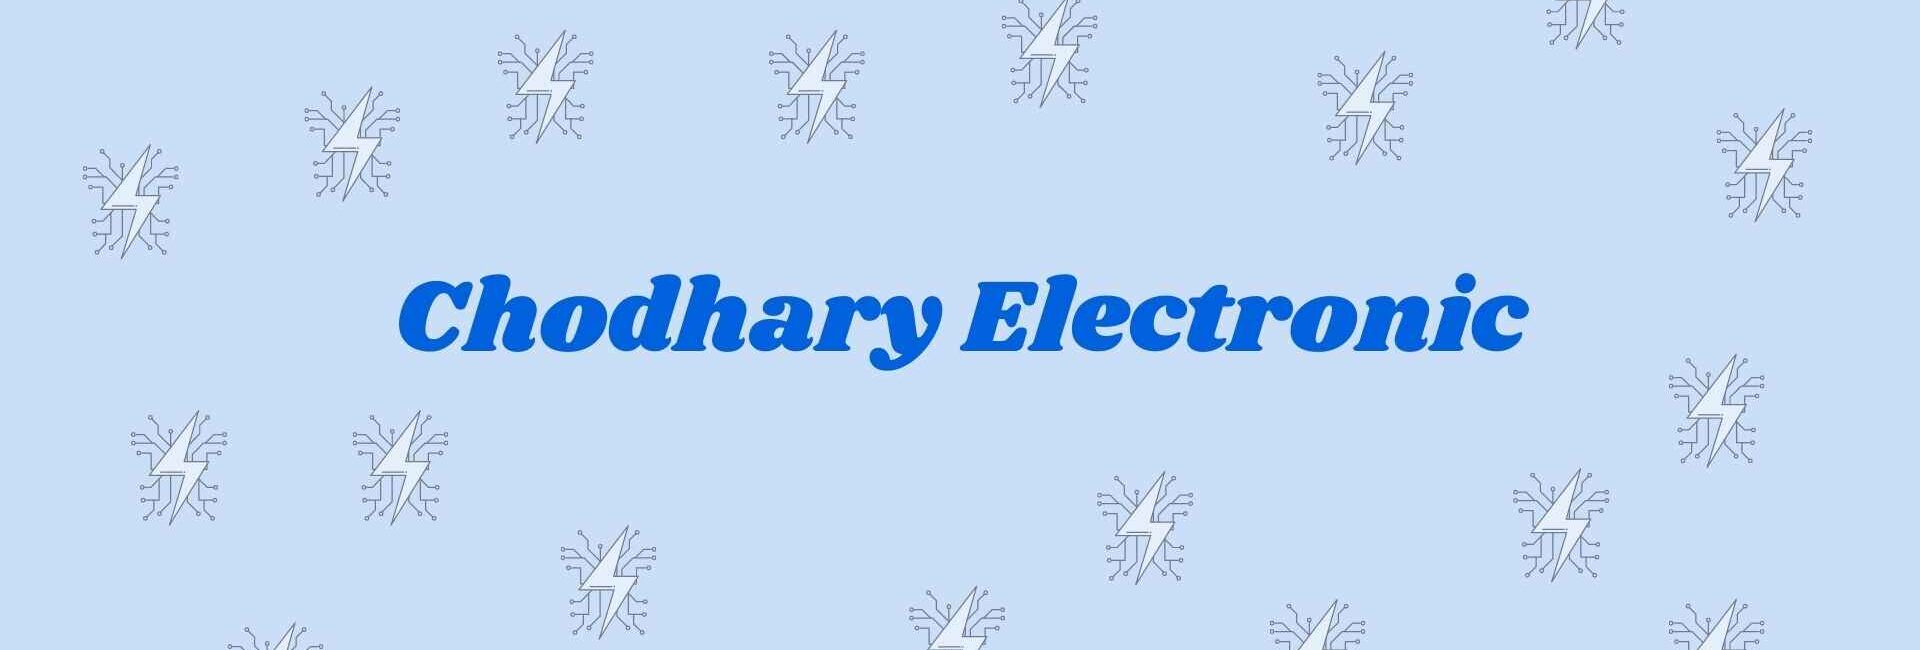 Chodhary Electronic - Electronics Goods Dealer in Noida